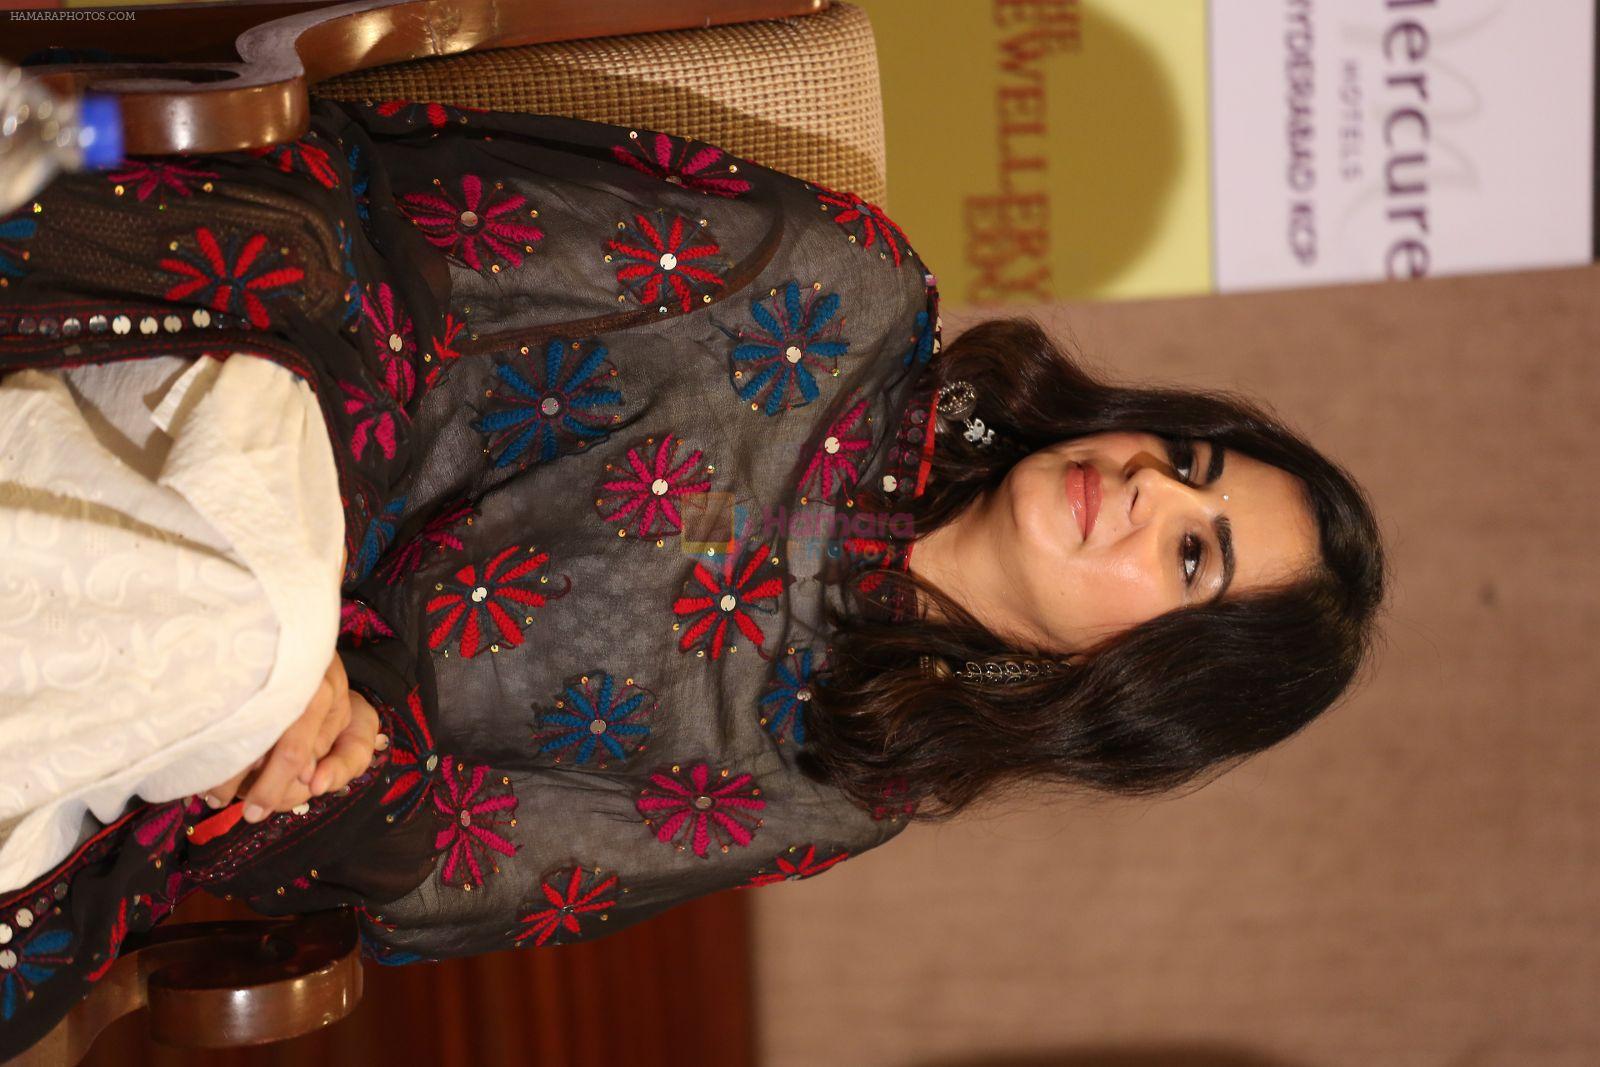 Kirti Kulhari at Pink press meet in Mumbai on 9th Sept 2016